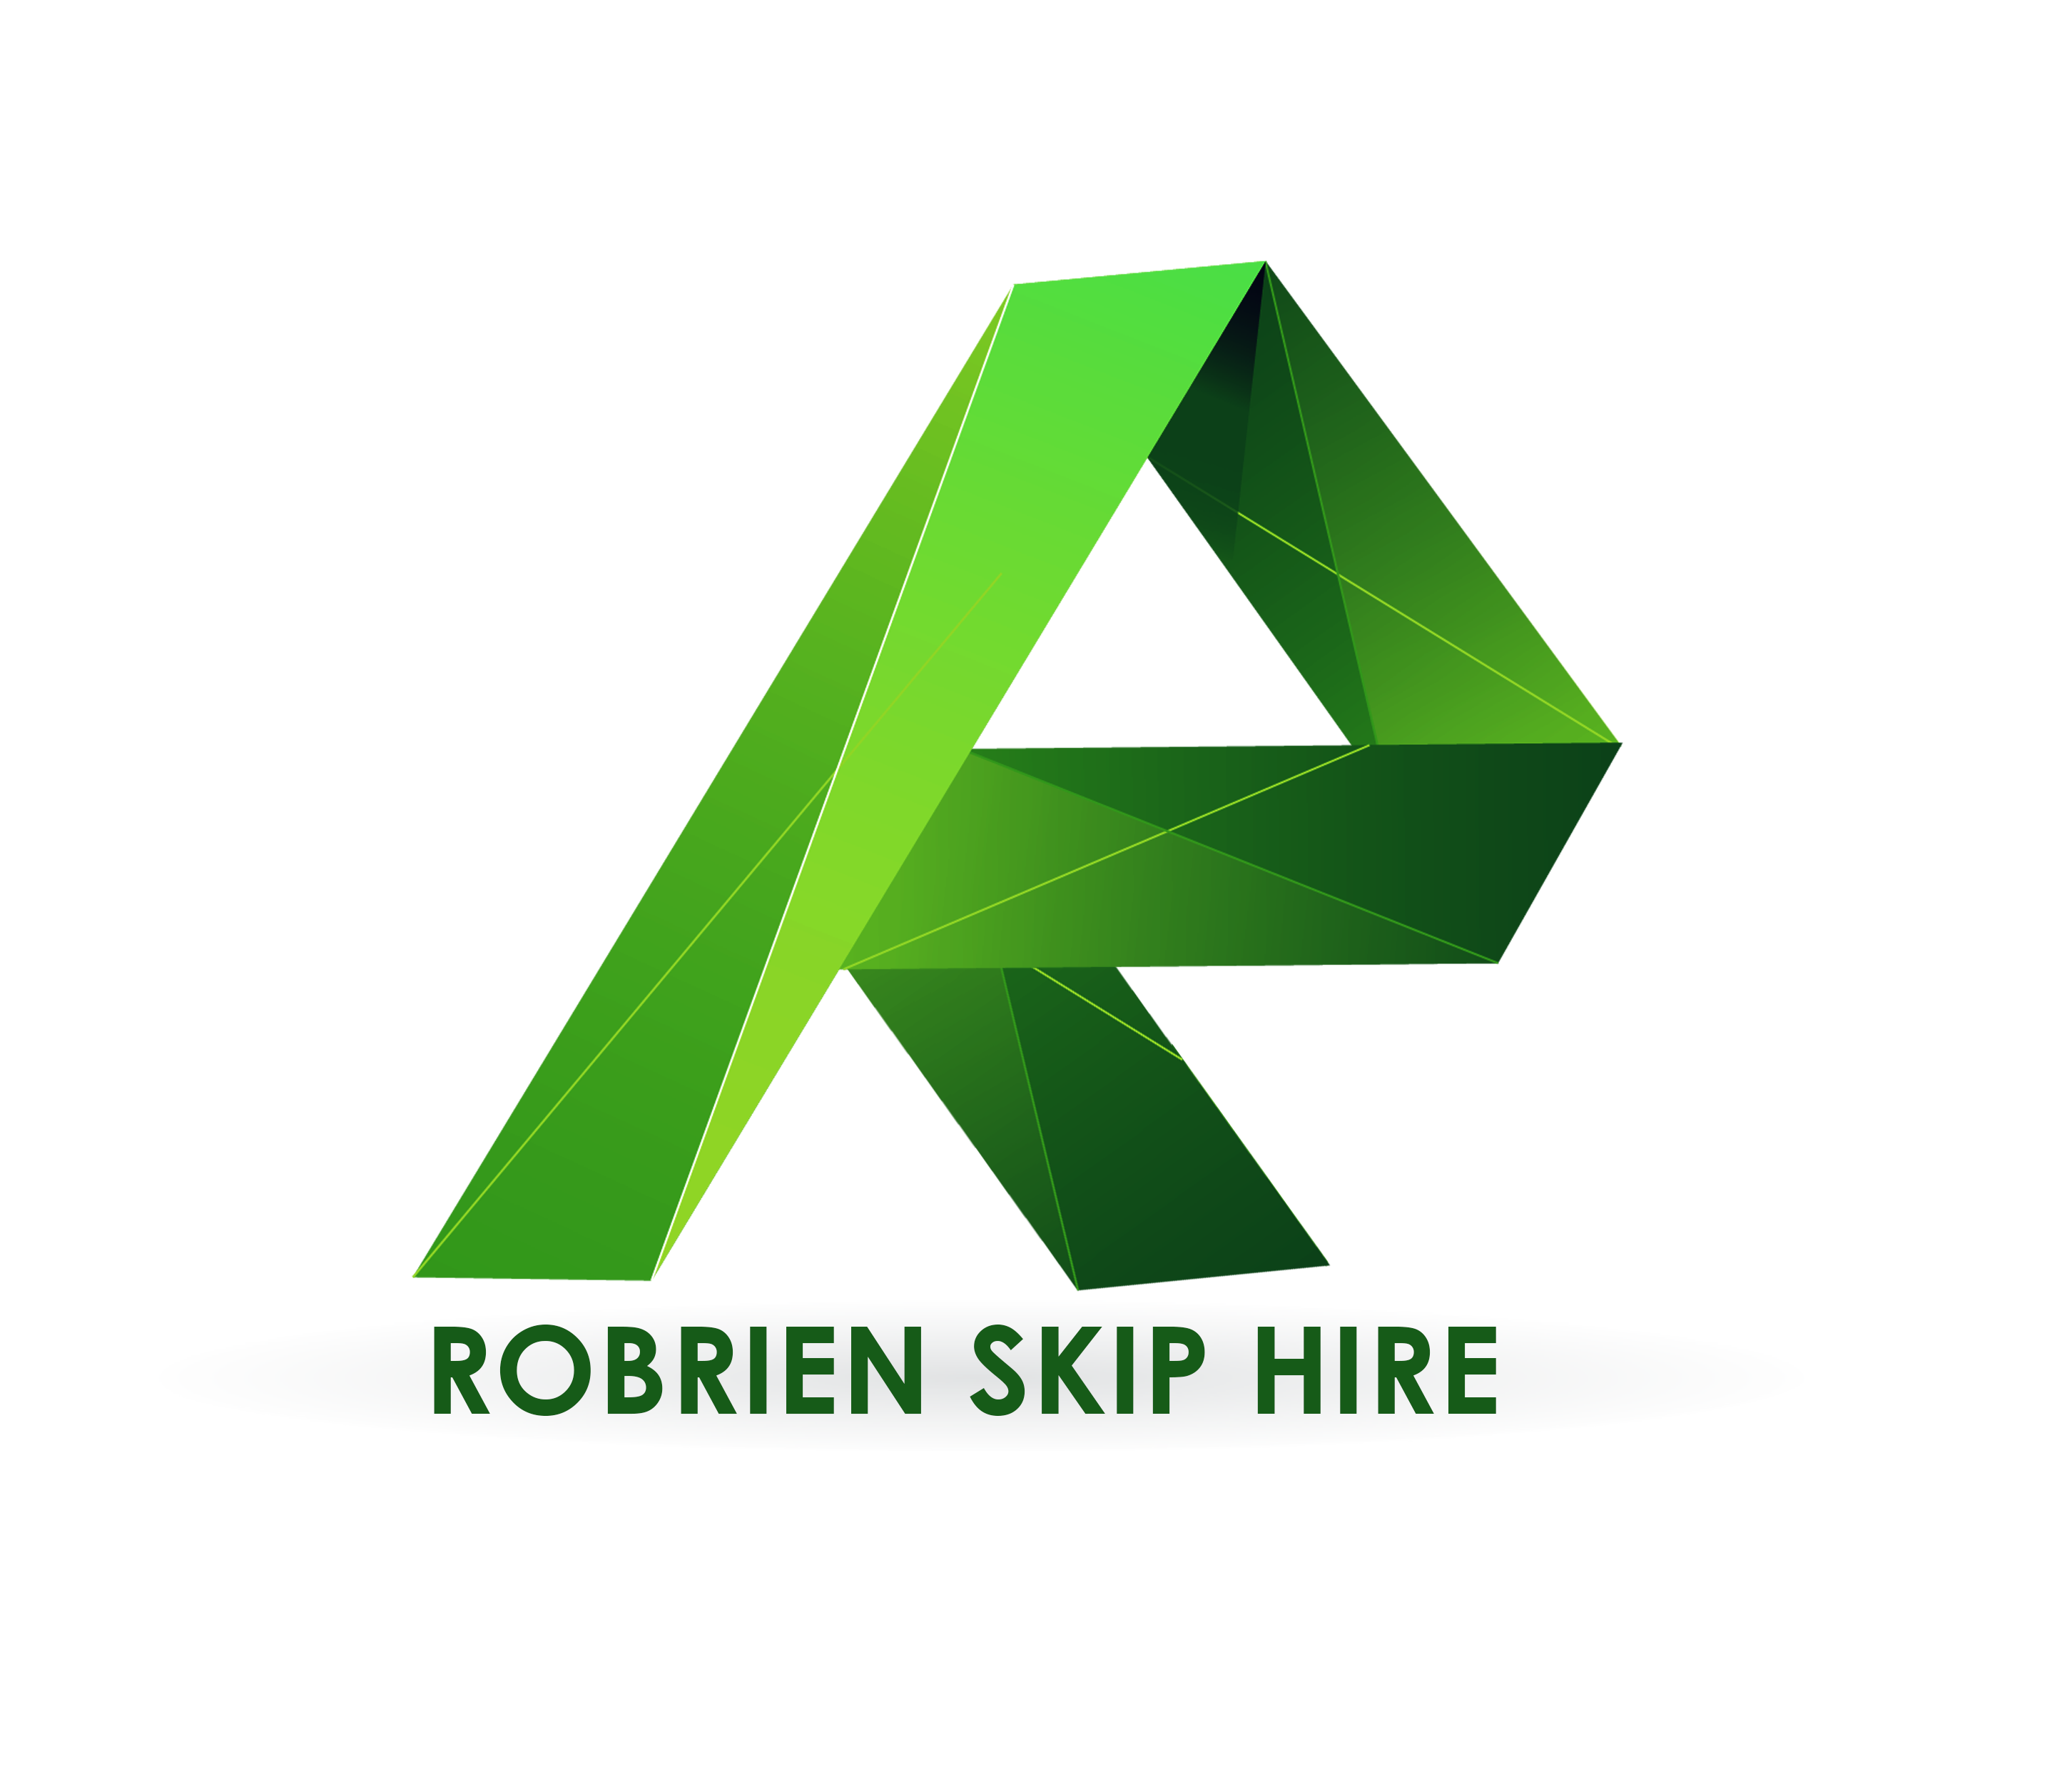 skip hire oxford logo